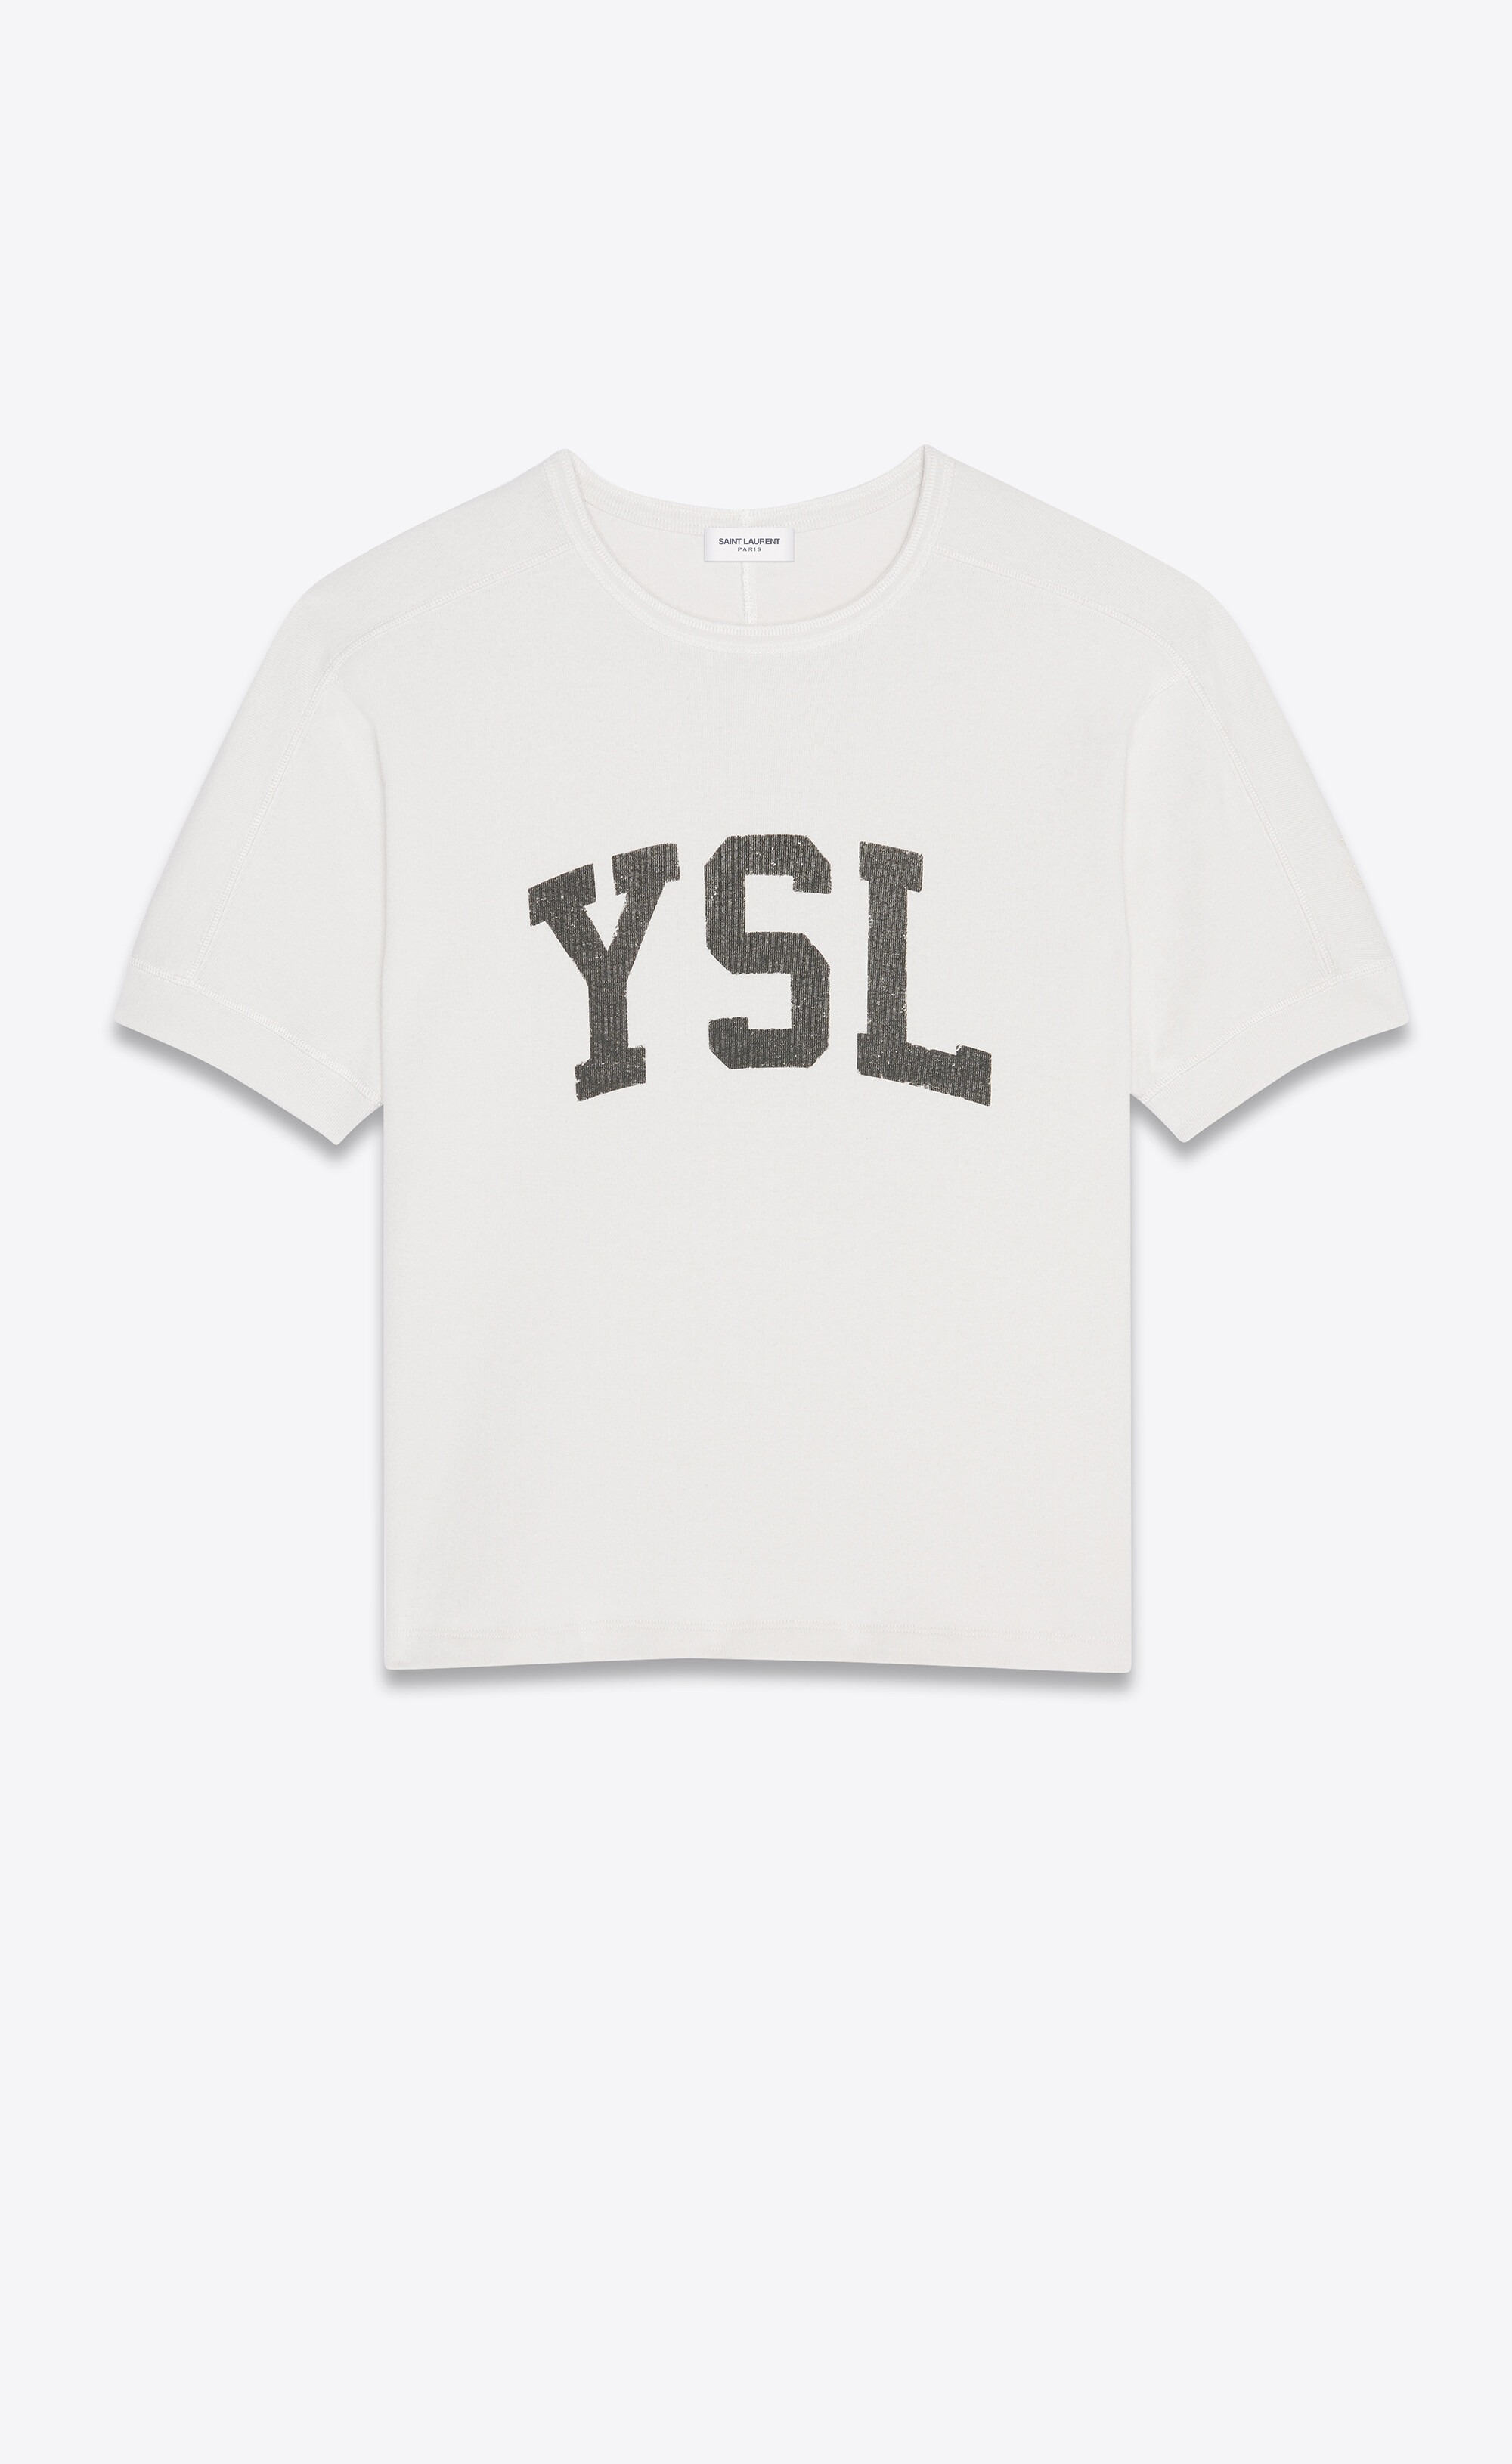 ysl vintage t-shirt